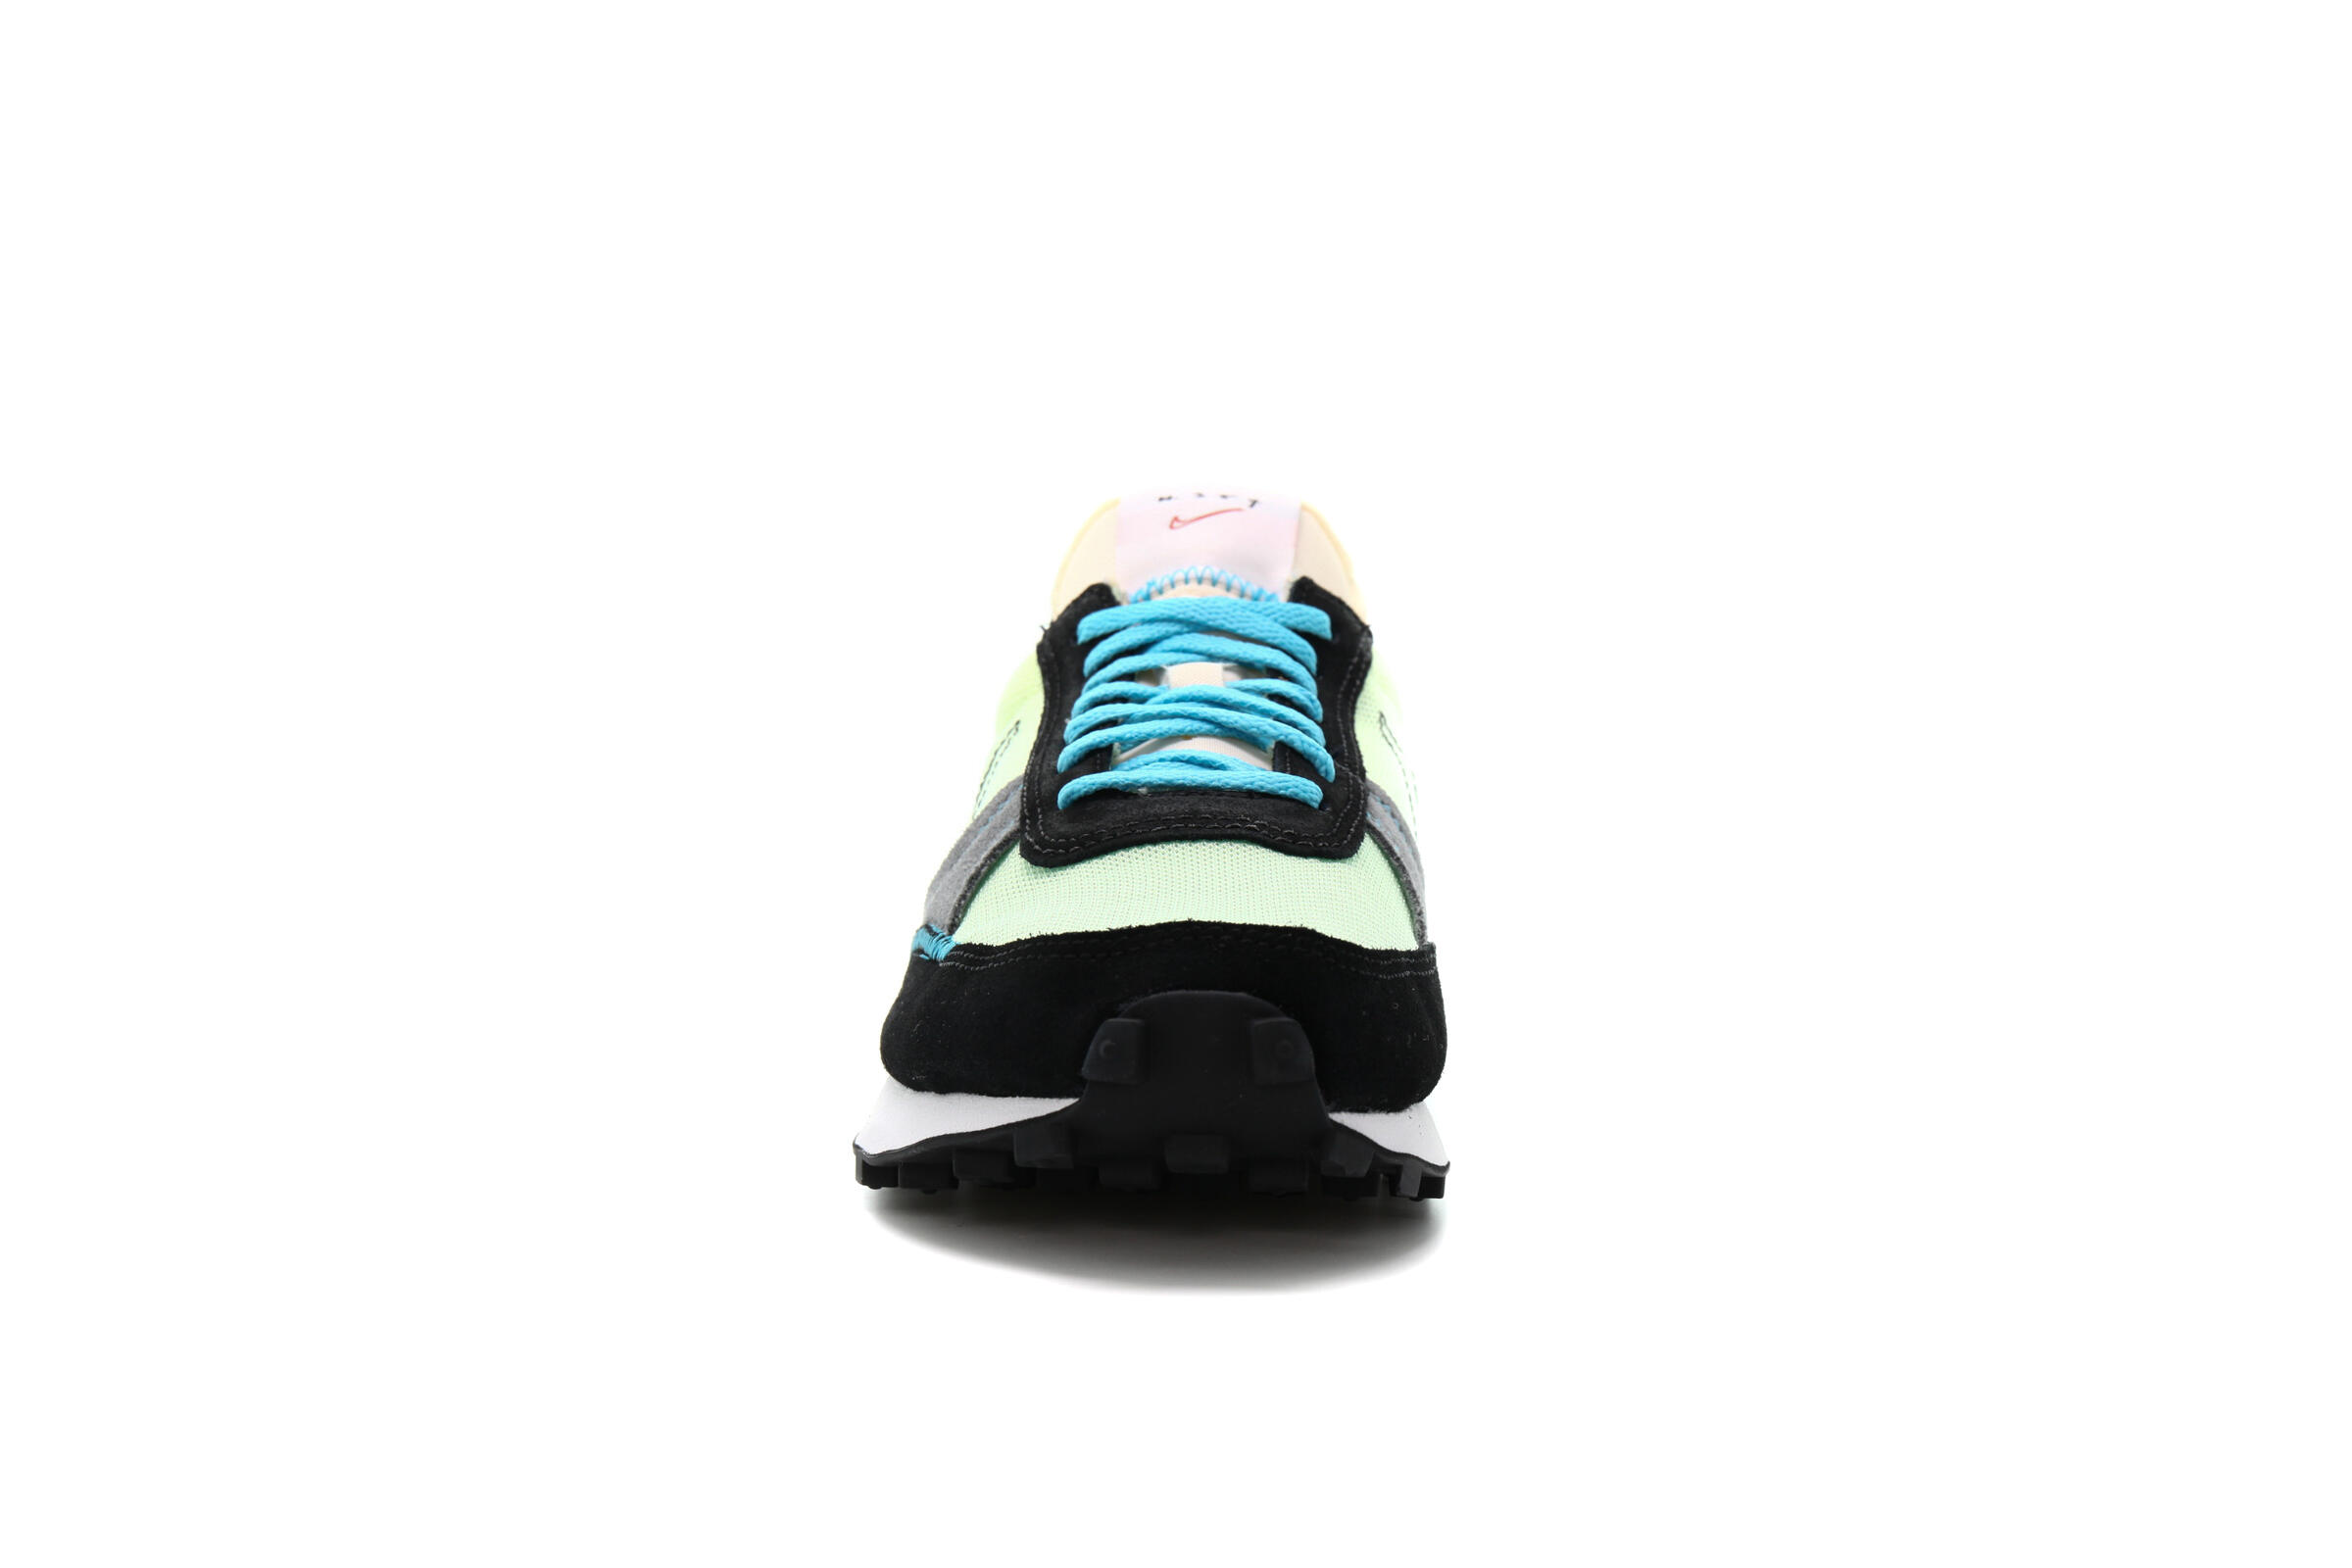 Nike DAYBREAK-TYPE "BARELY VOLT"